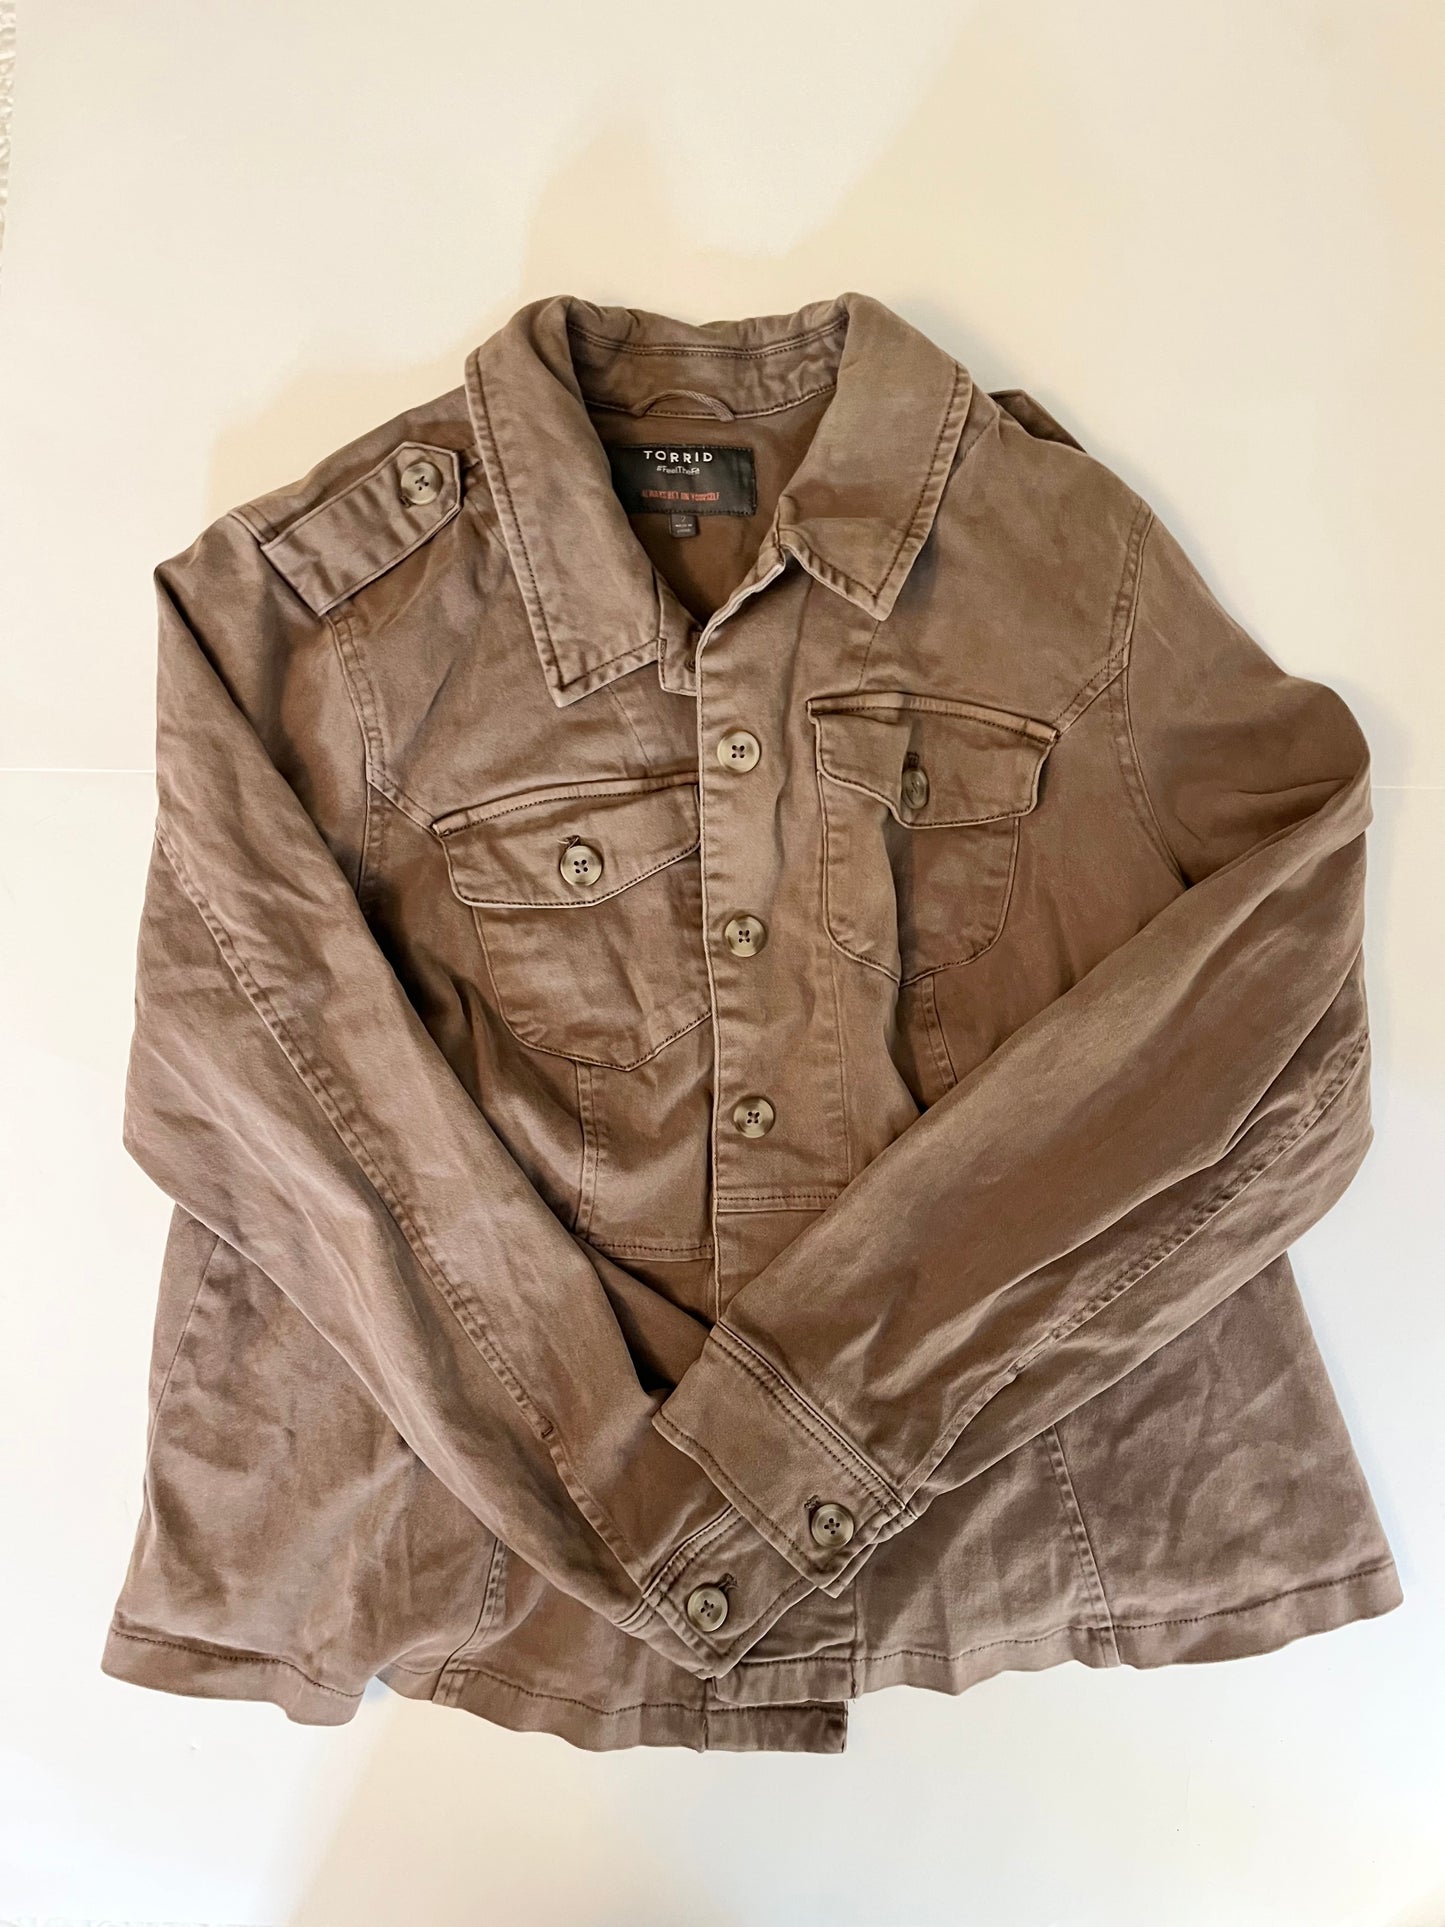 Torrid Size 2 Brown Jacket